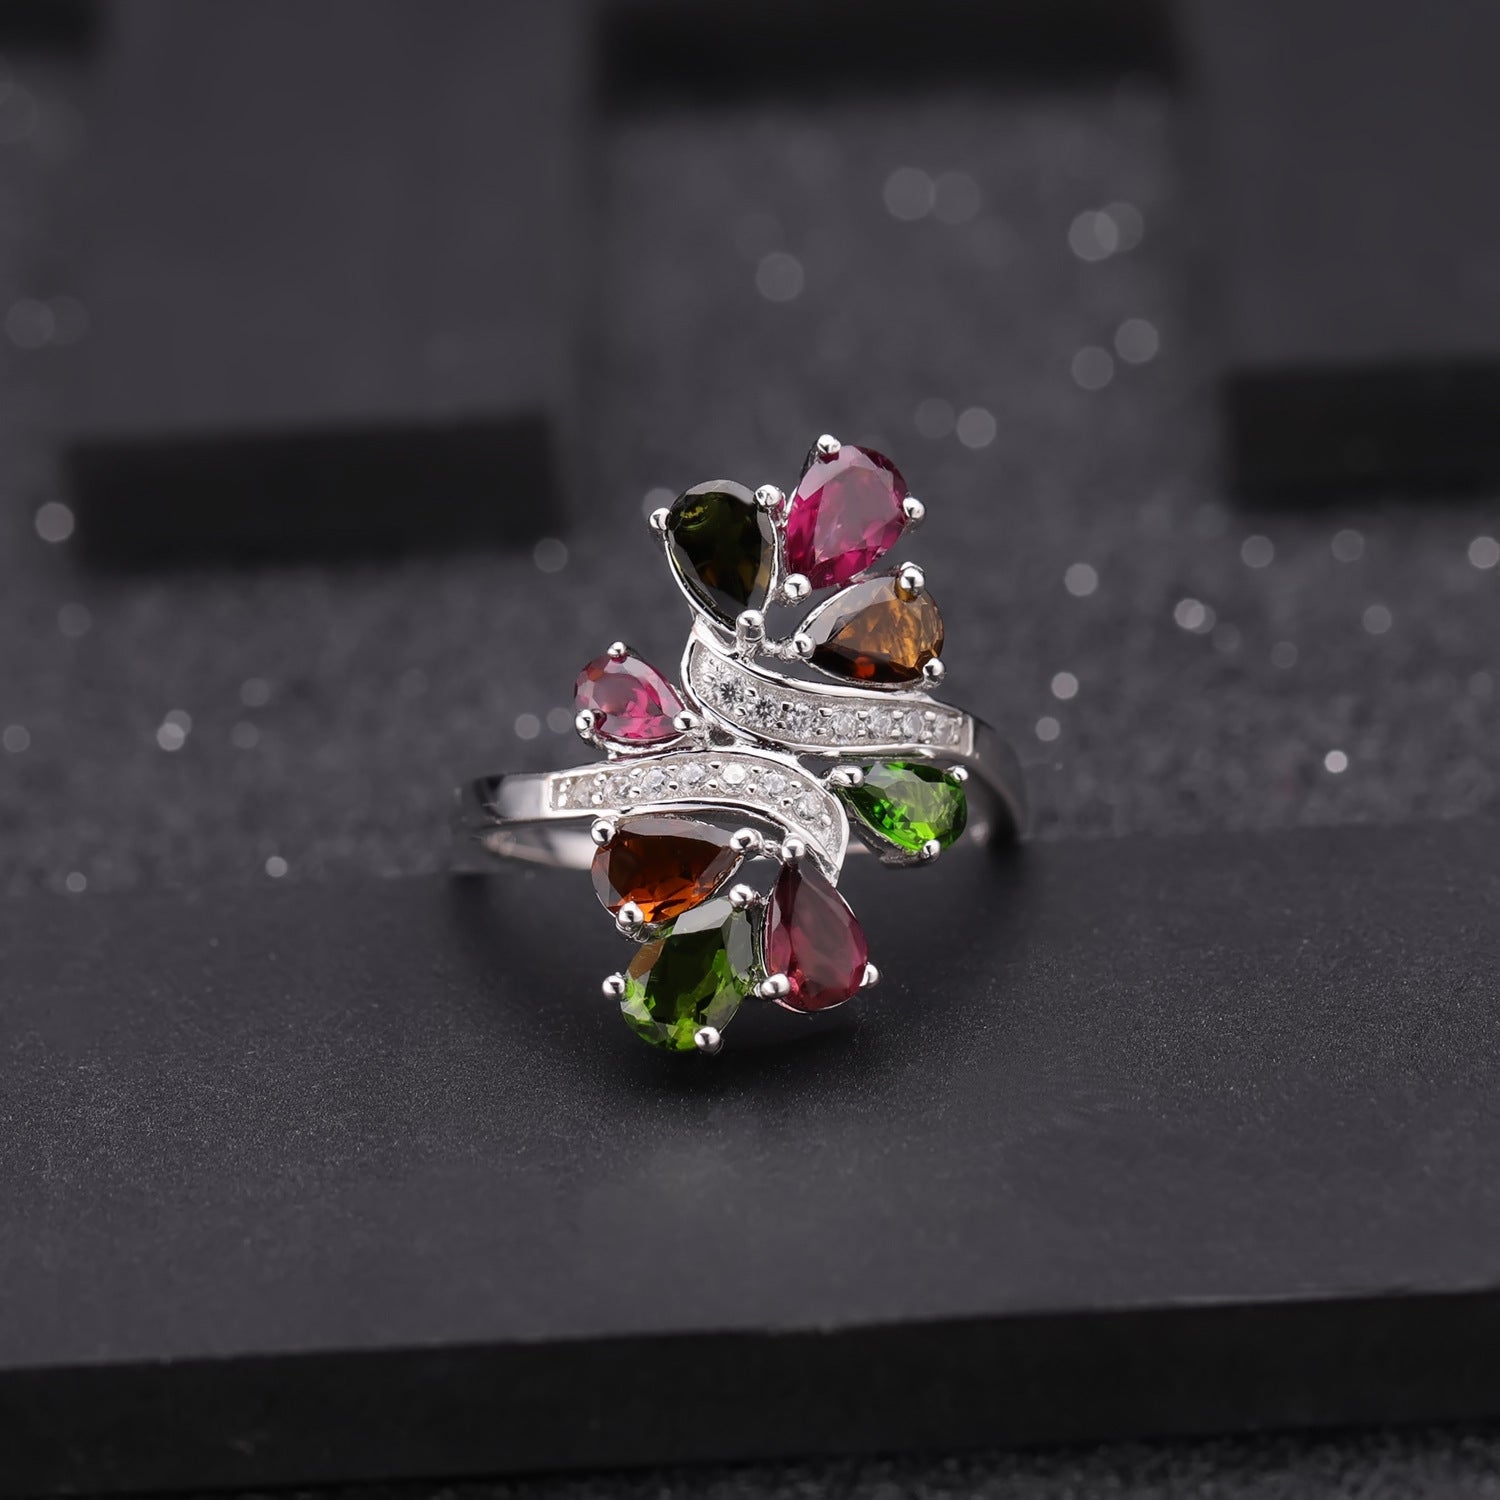 European Retro Design Inlaid Natural Colourful Gemstones Silver Ring for Women